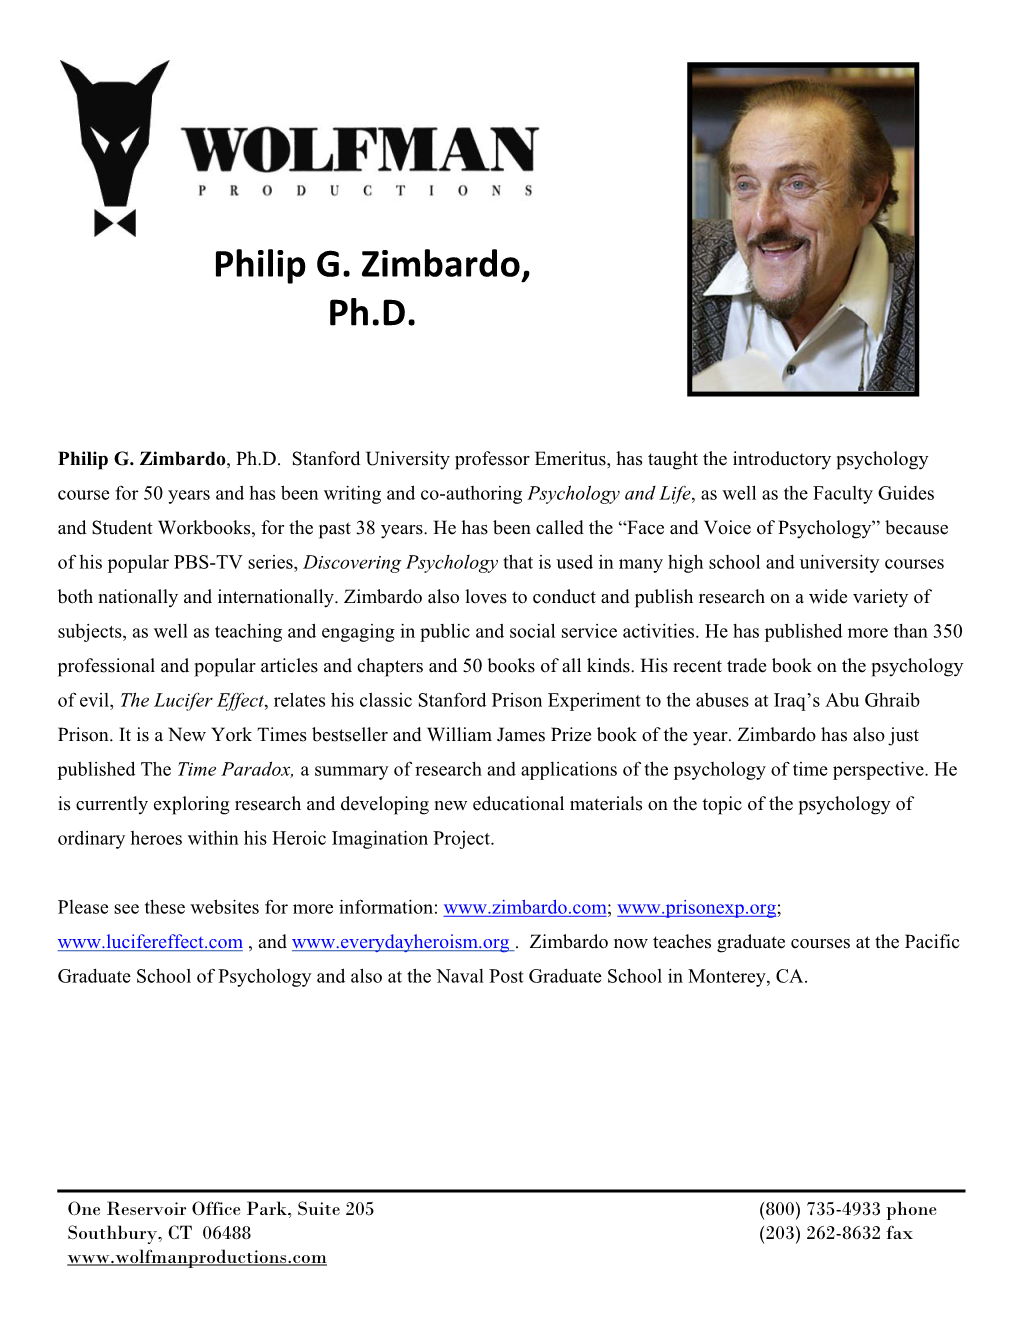 Biography: Philip Zimbardo, Ph.D., Wolfman Productions